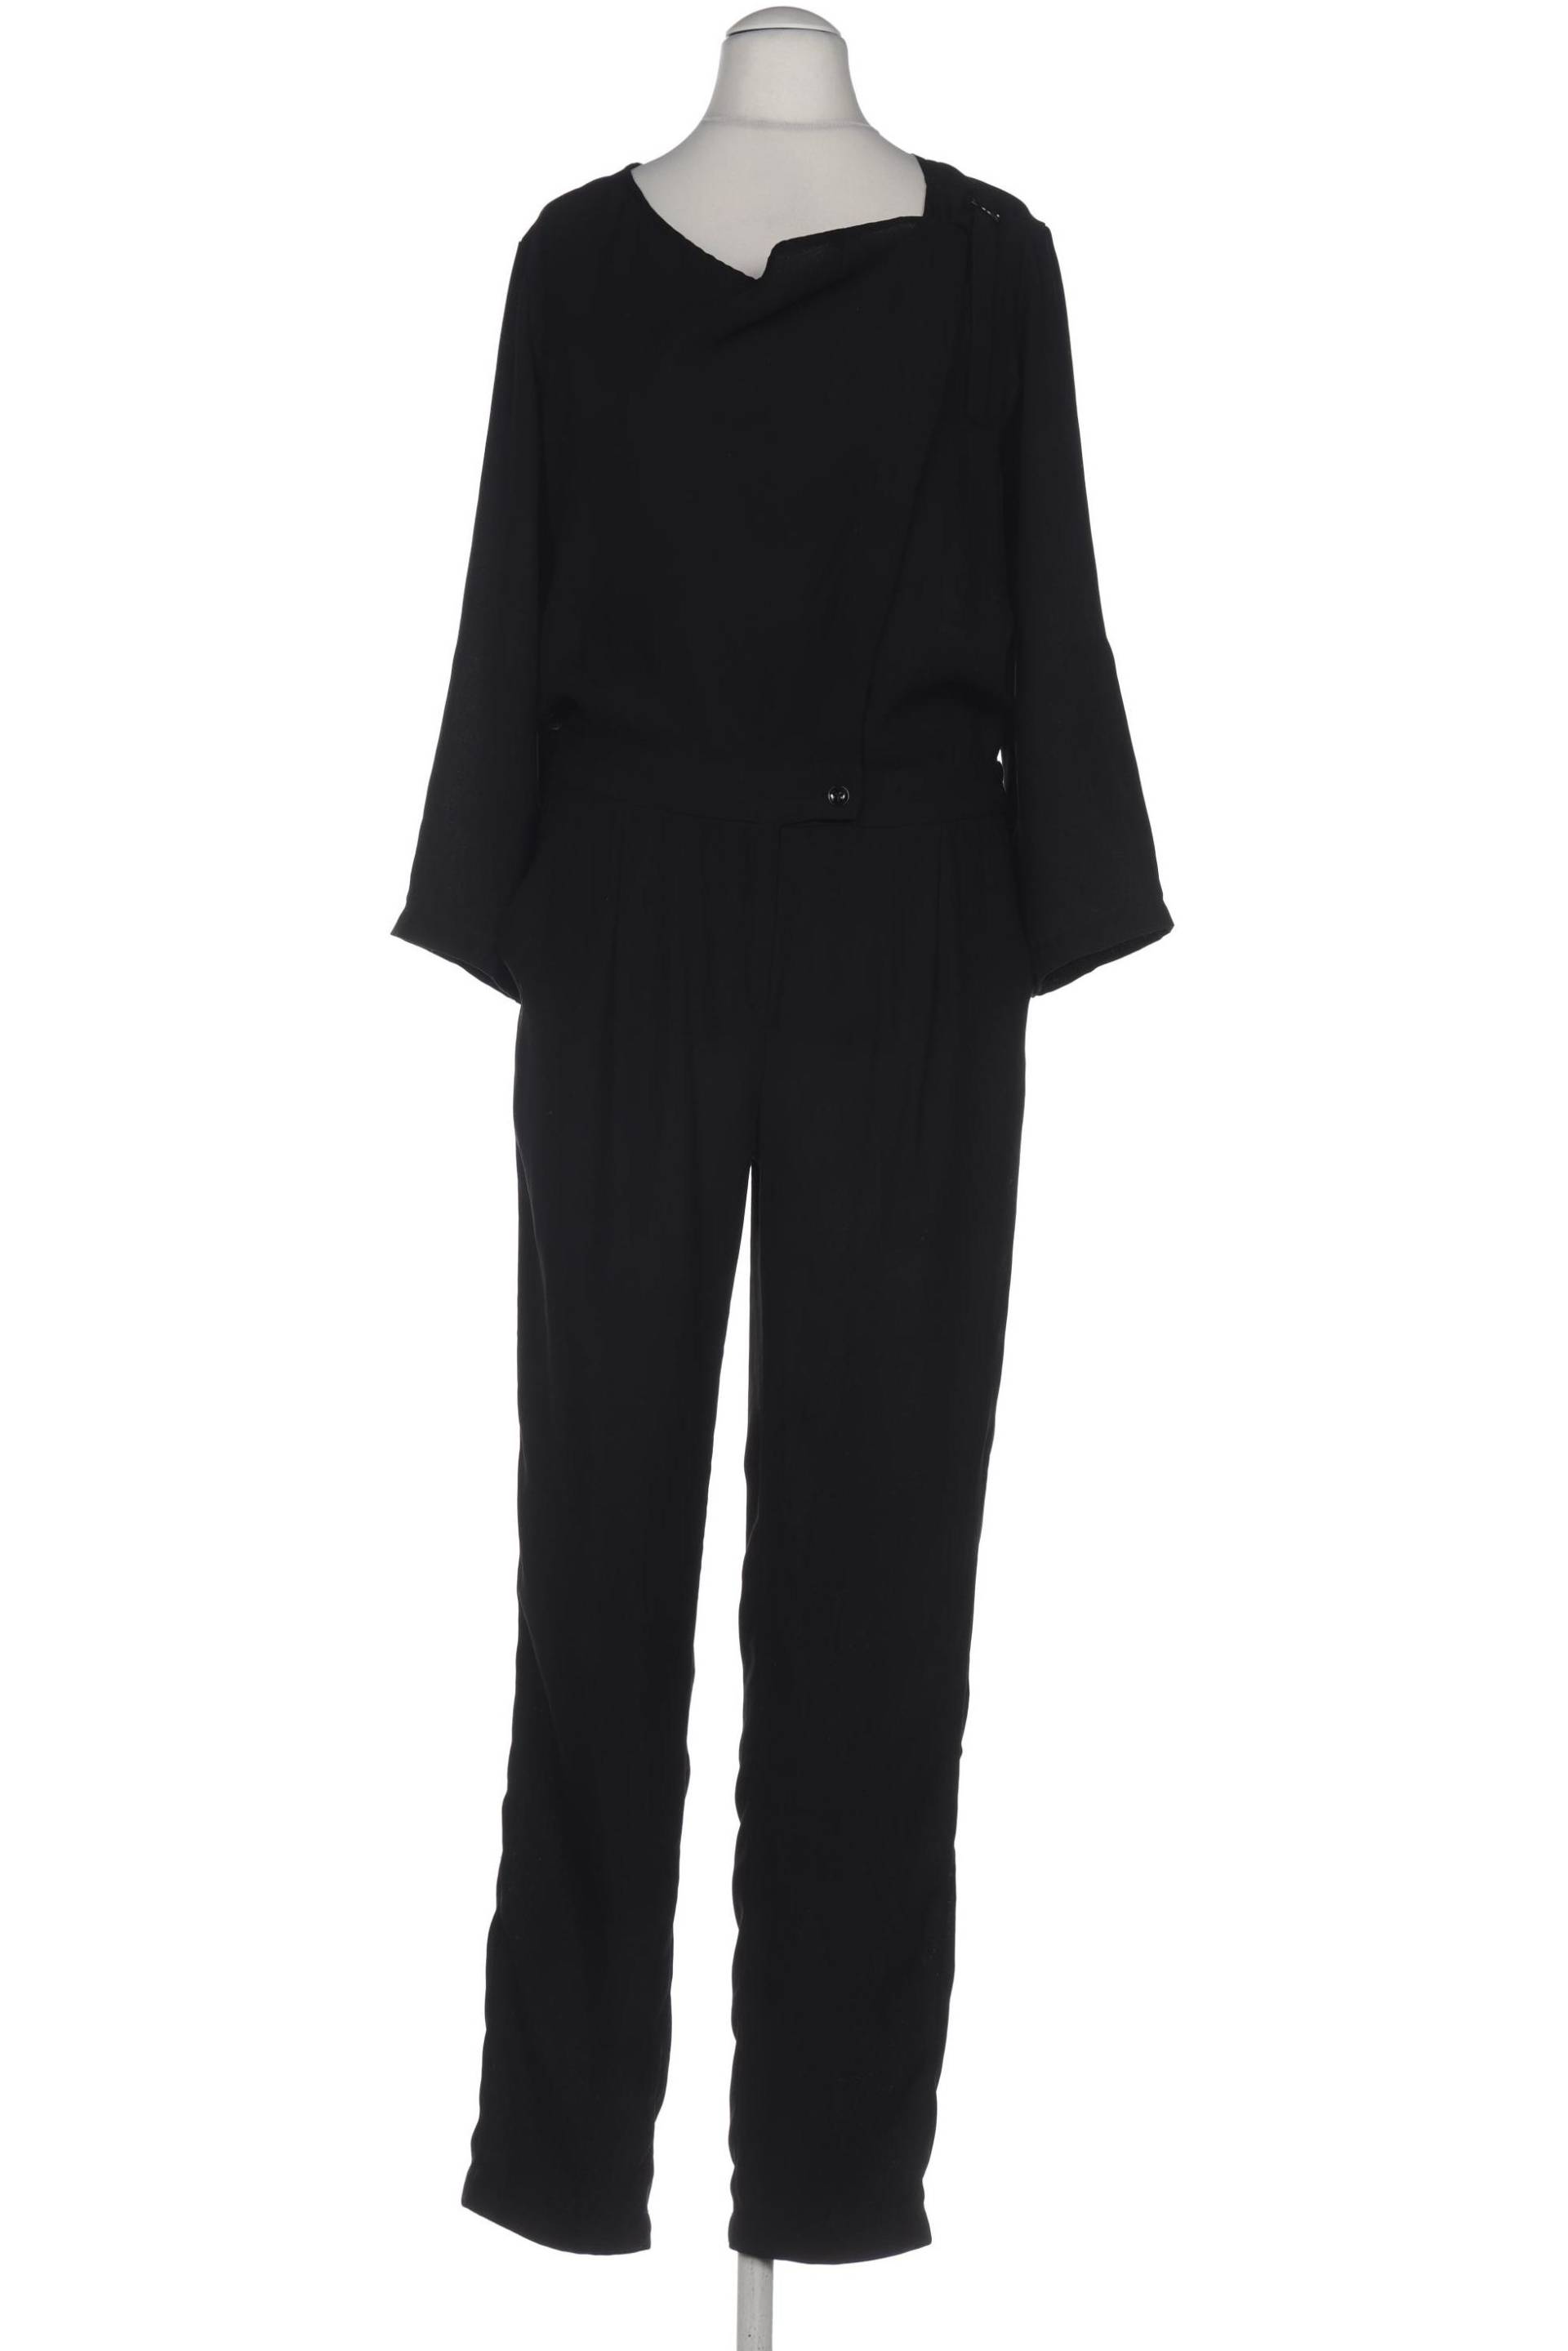 Soaked in Luxury Damen Jumpsuit/Overall, schwarz von Soaked in Luxury